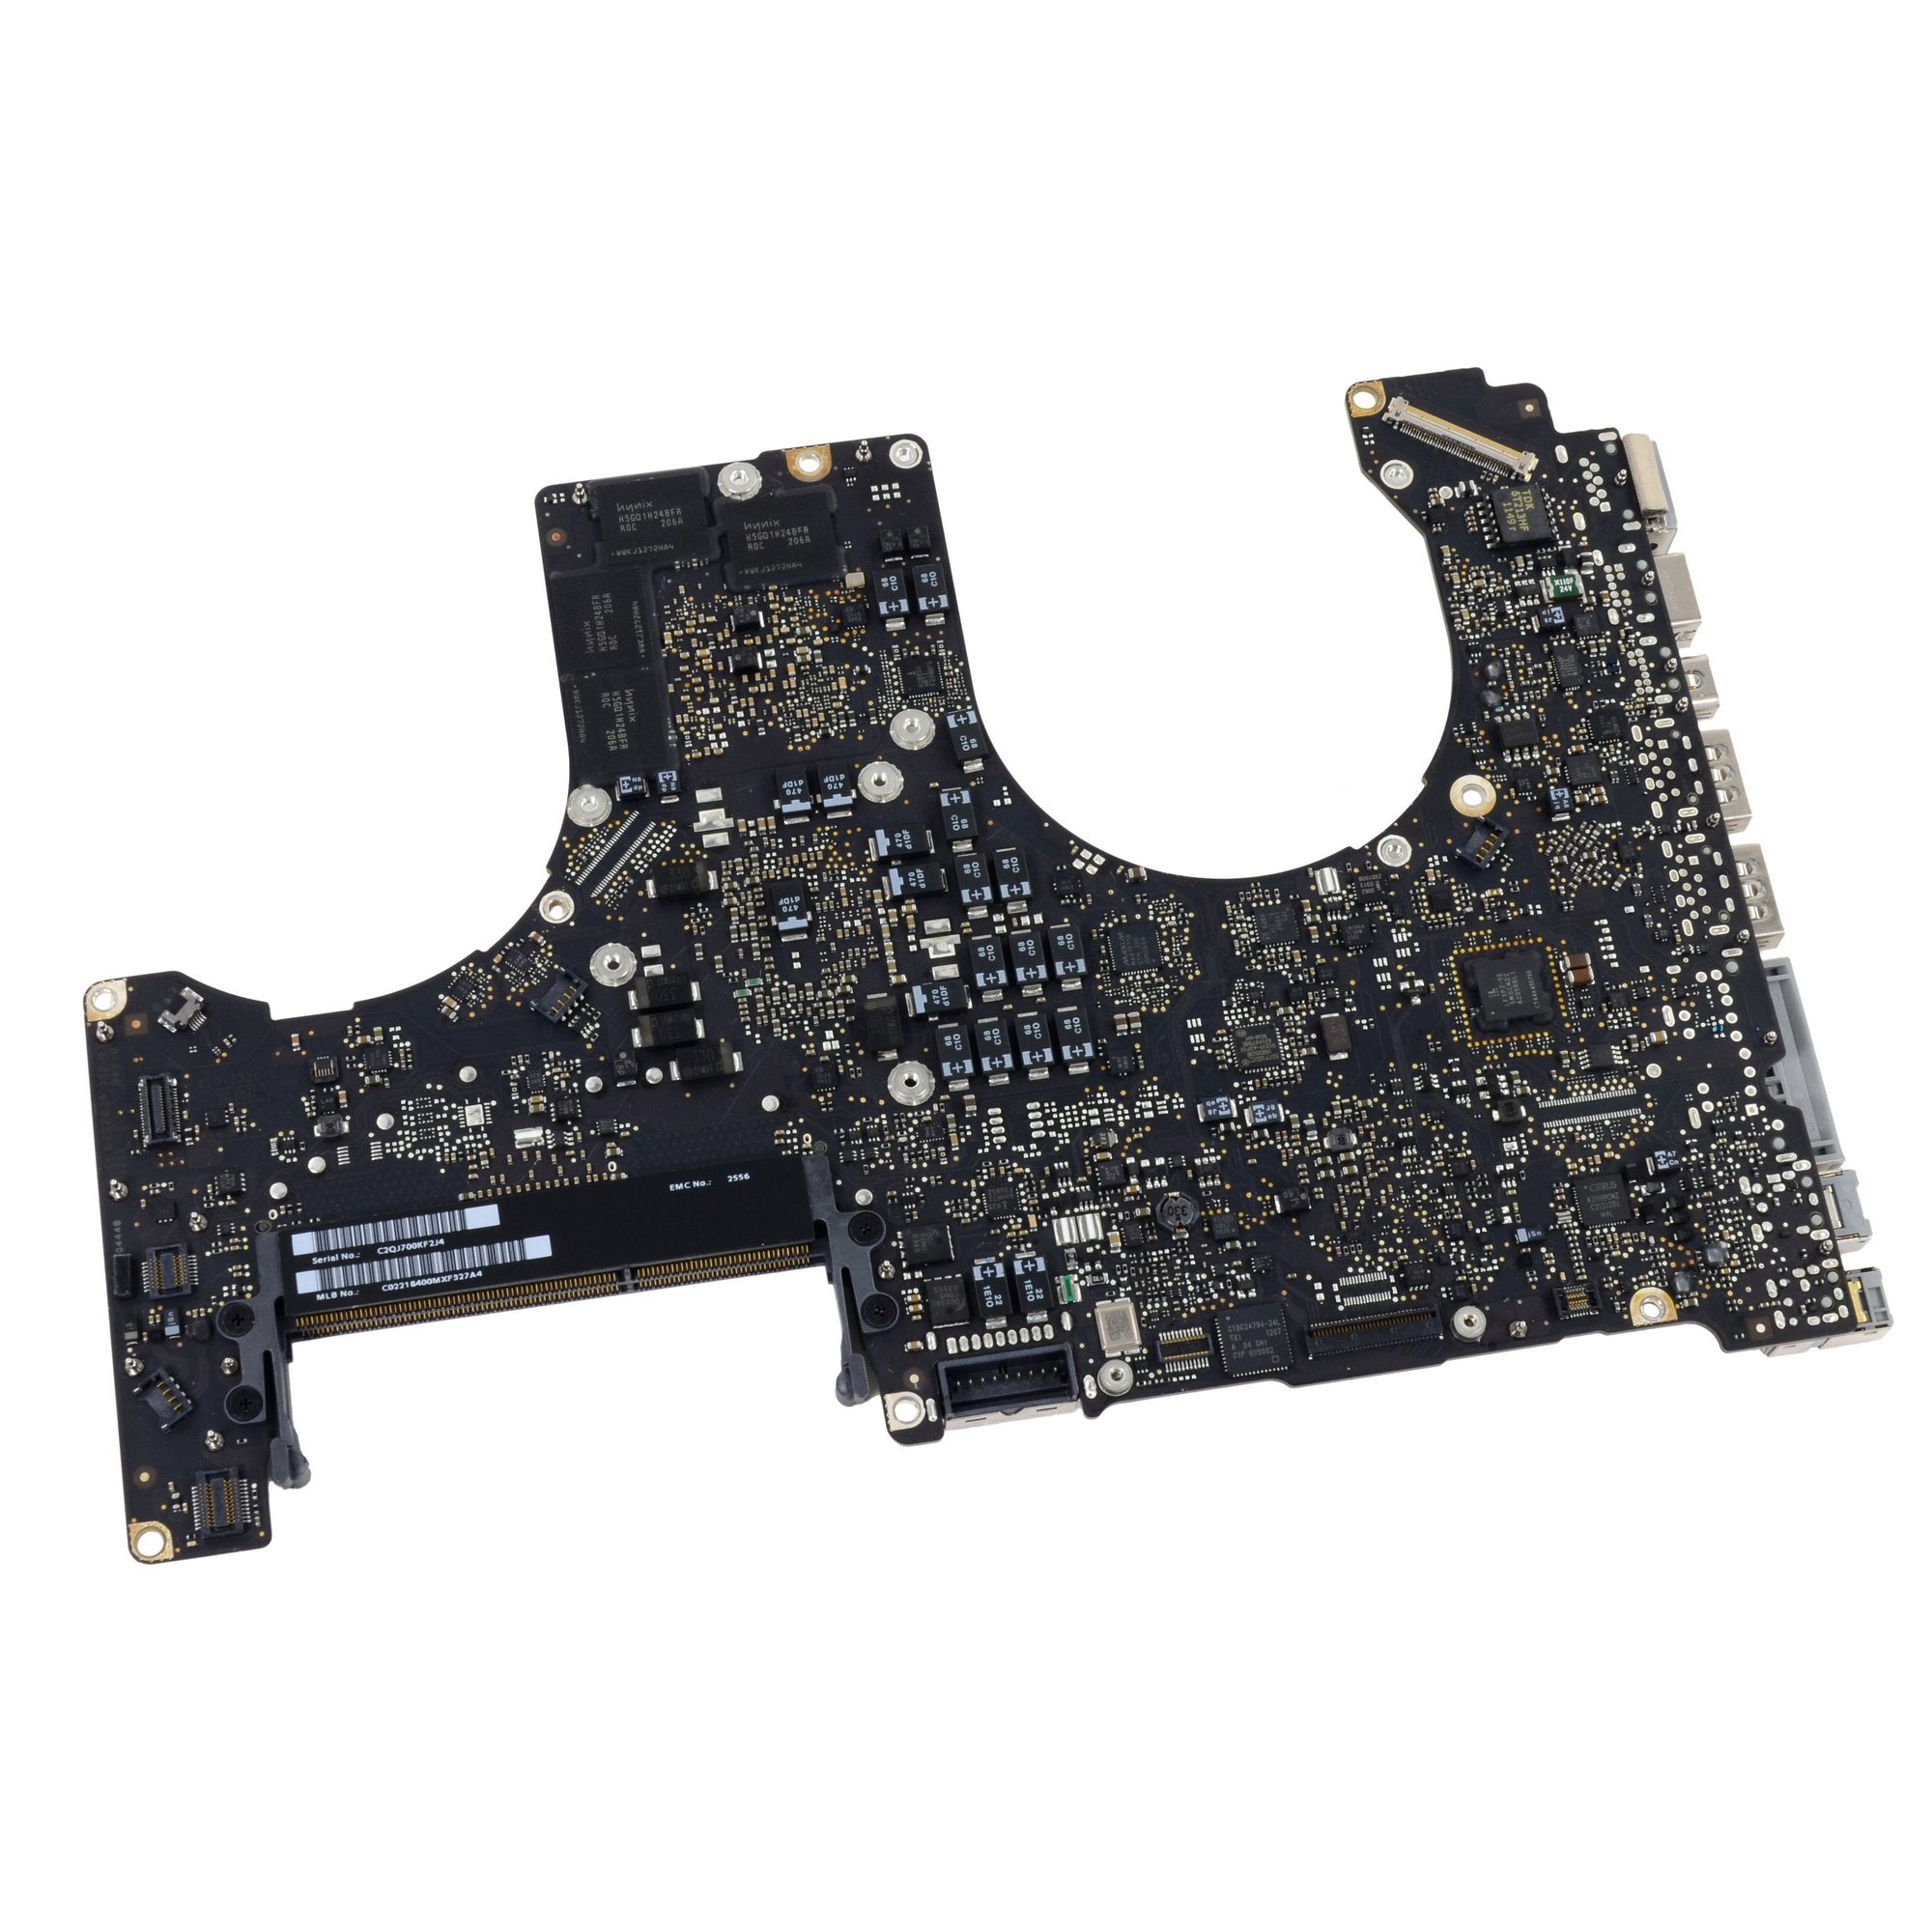 MacBook Pro 15" Unibody (Mid 2012) 2.7 GHz Logic Board